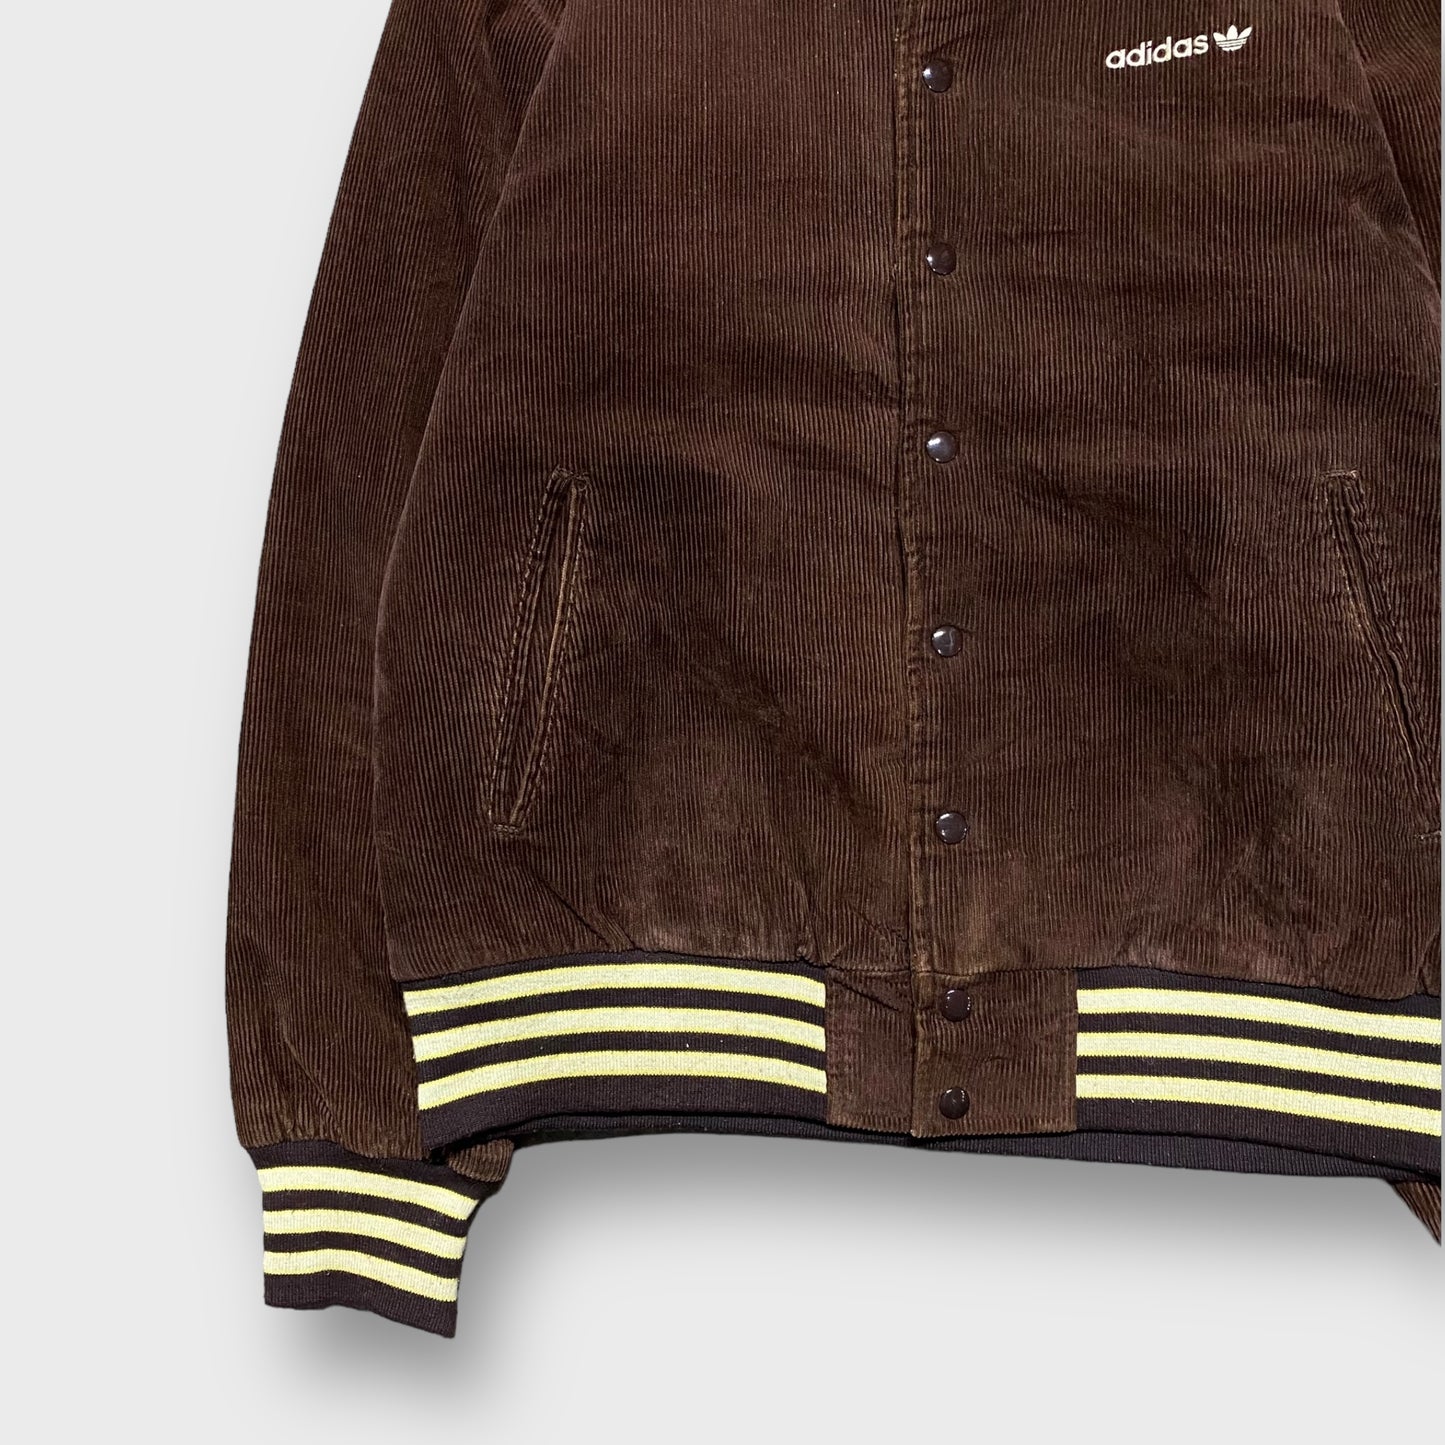 90's "adidas" Corduroy jacket